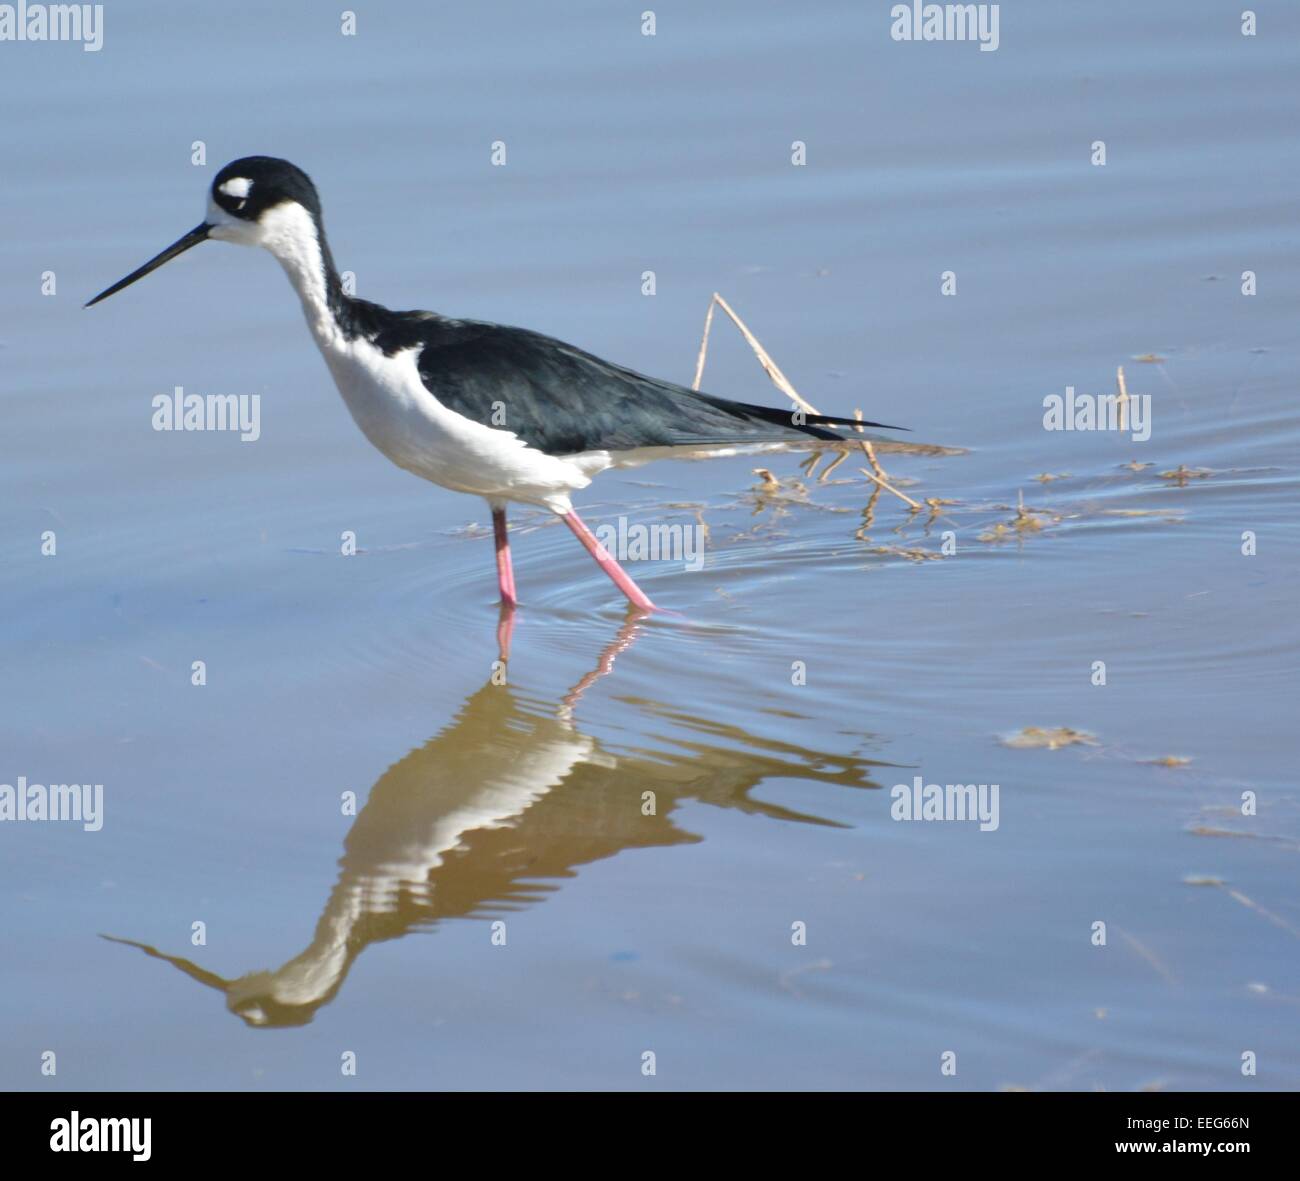 Bird in water Stock Photo - Alamy